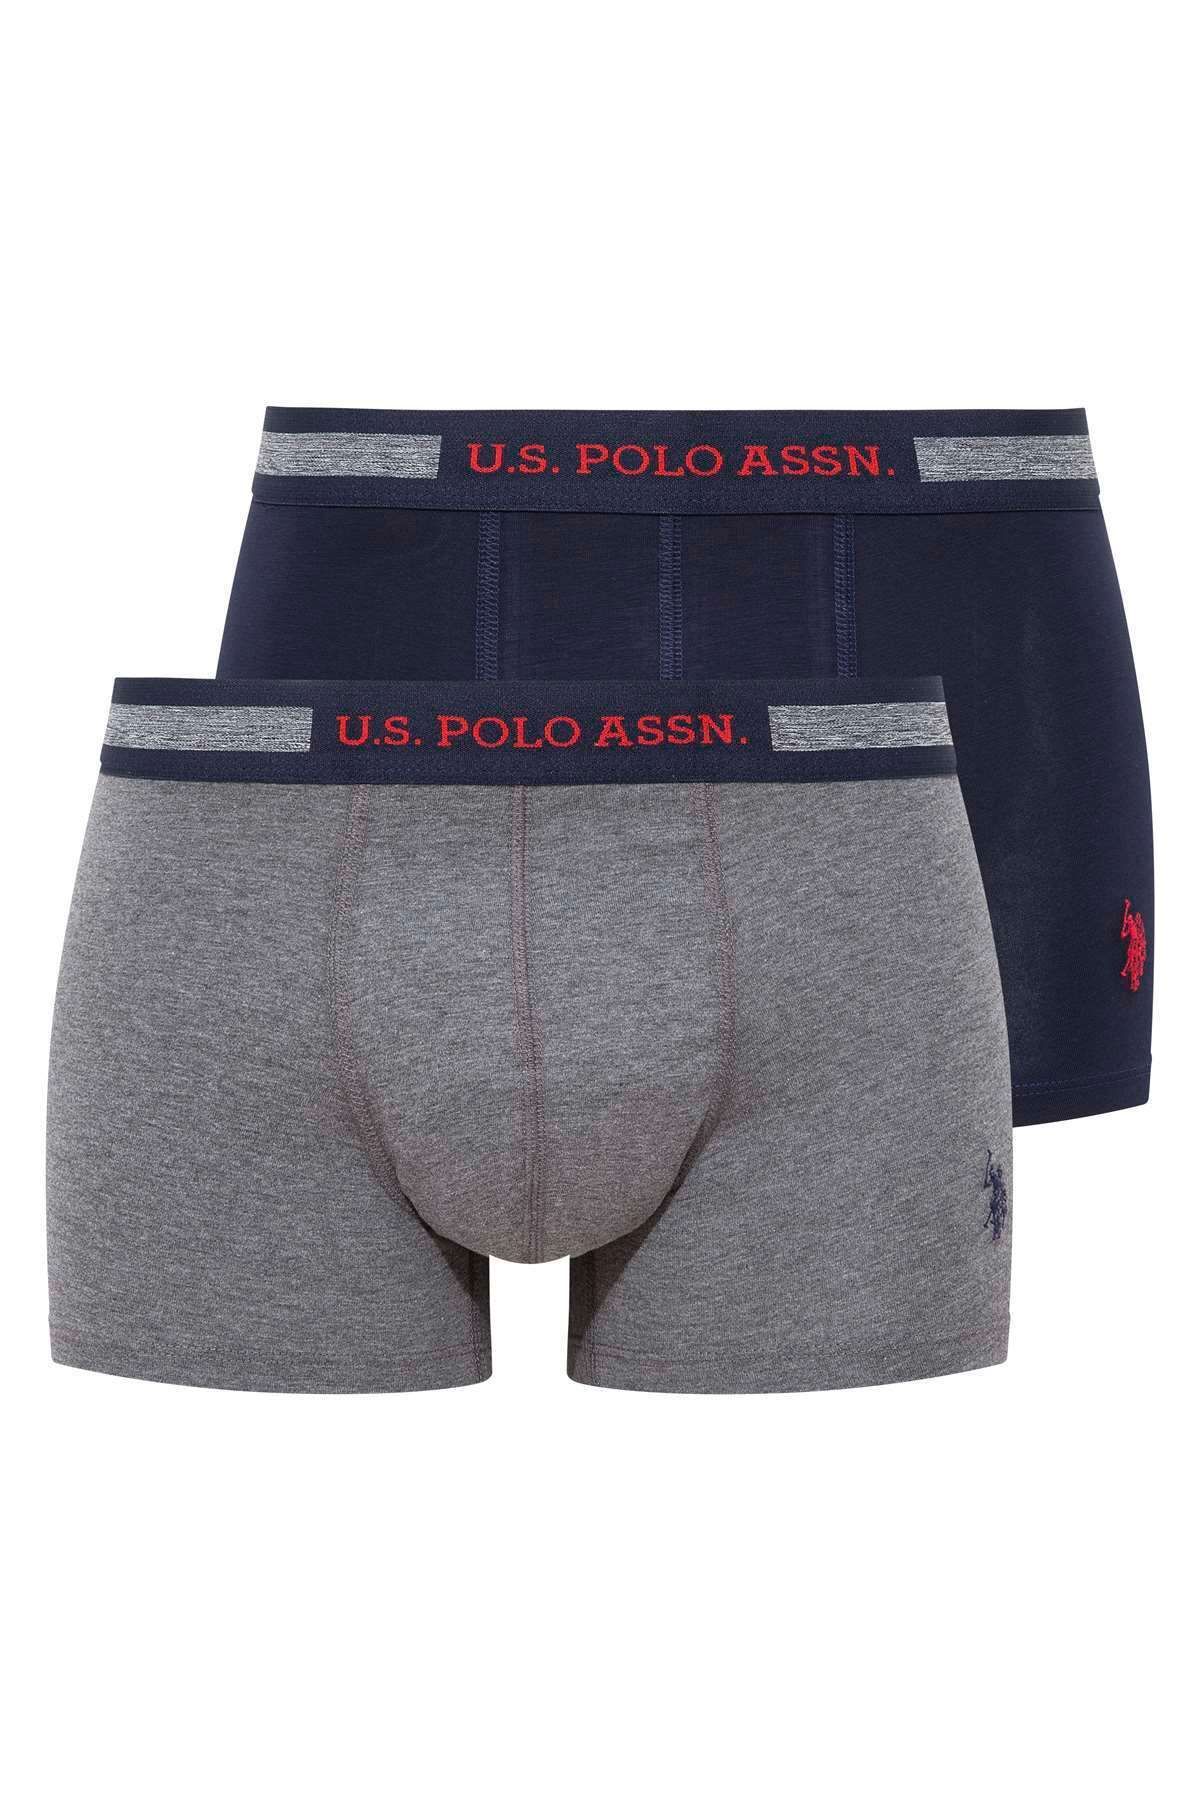 U.S. Polo Assn. Erkek Lacivert - Antrasit Melanj 2 Li Boxer 80373